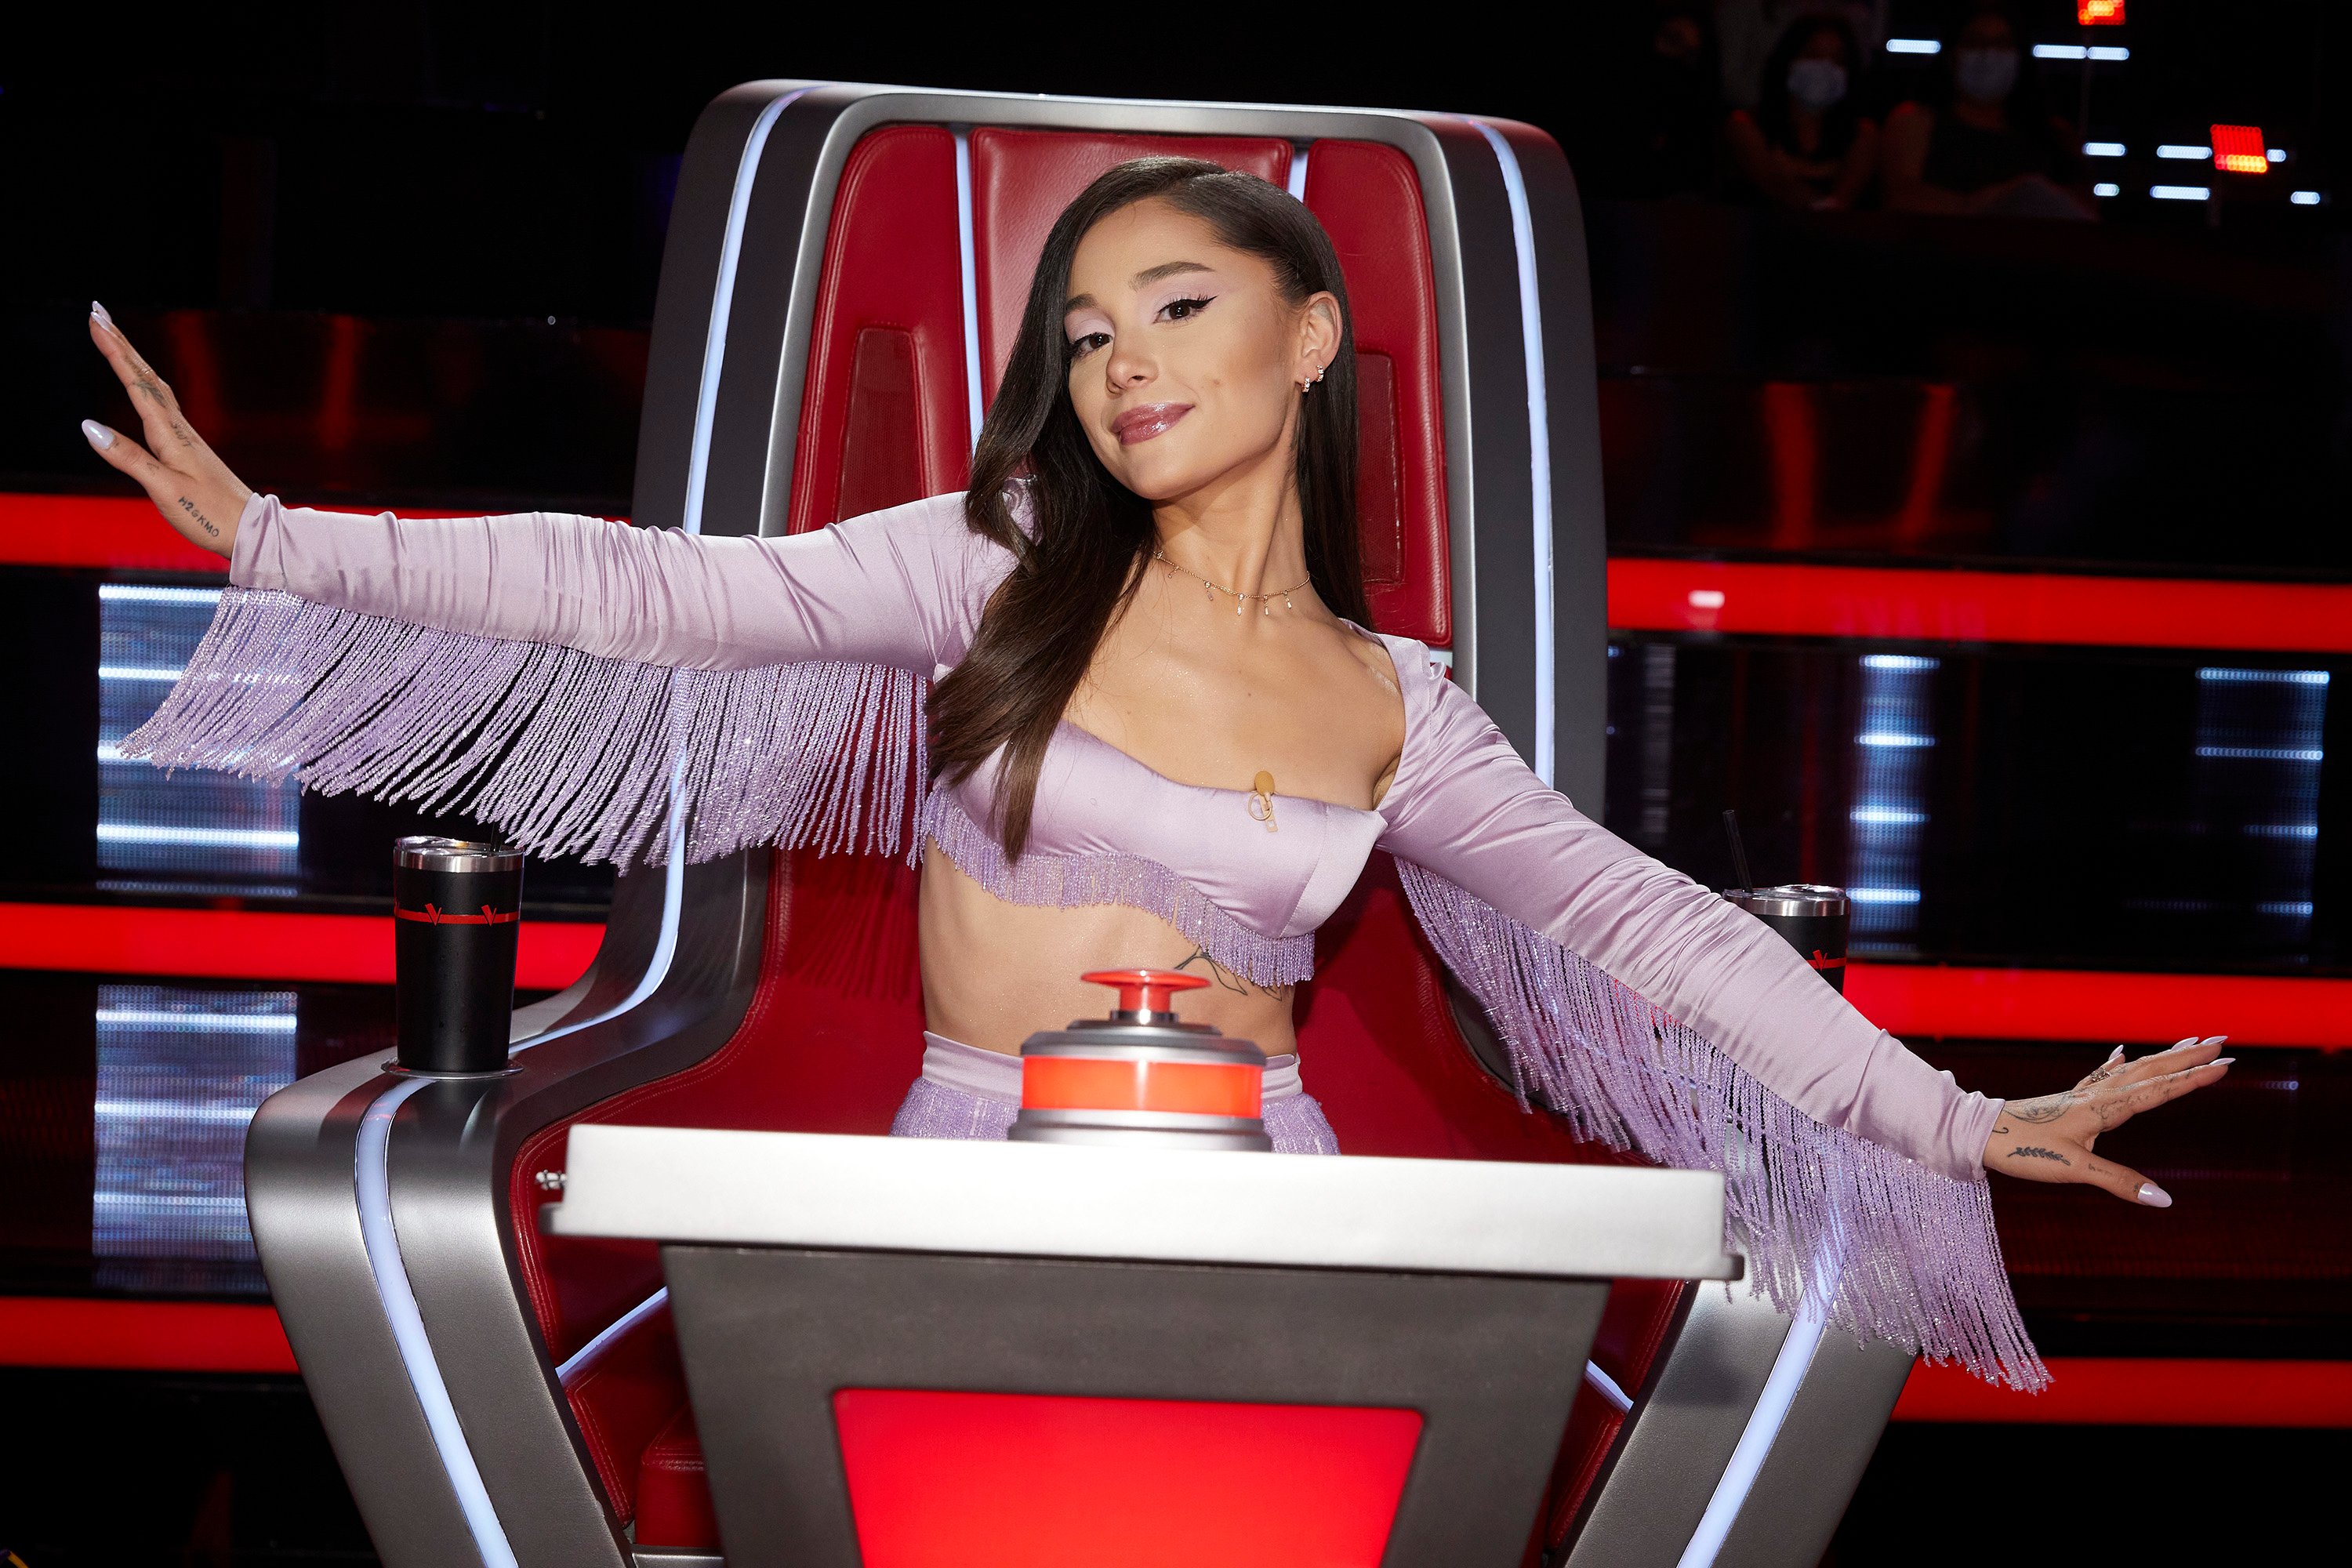 'No Tears Left to Cry' artist Ariana Grande on 'The Voice' Season 21